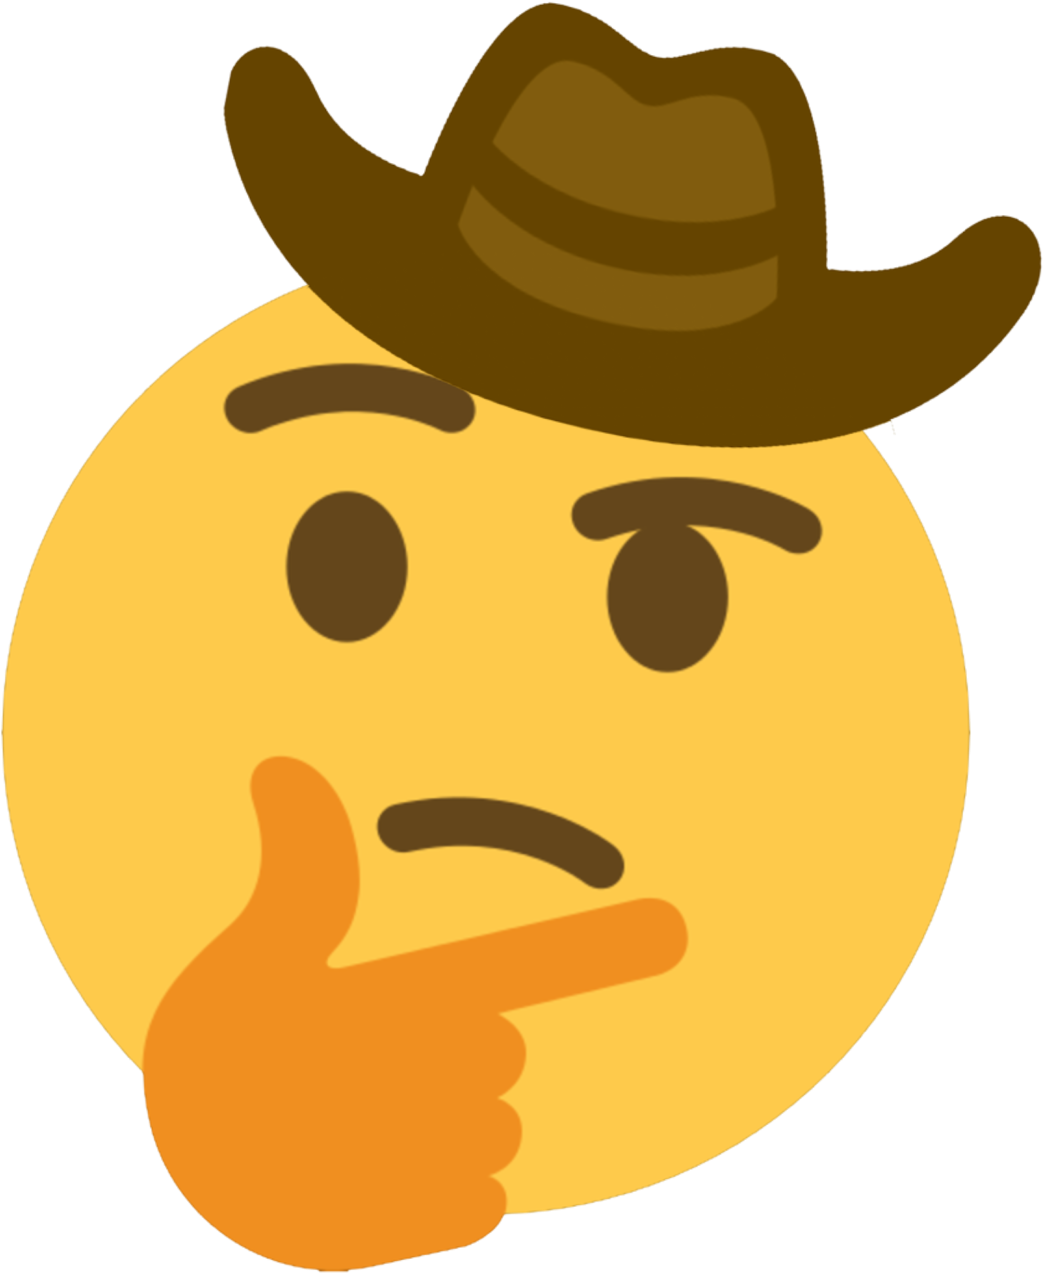 Sad Cowboy Emoji PNG Pic